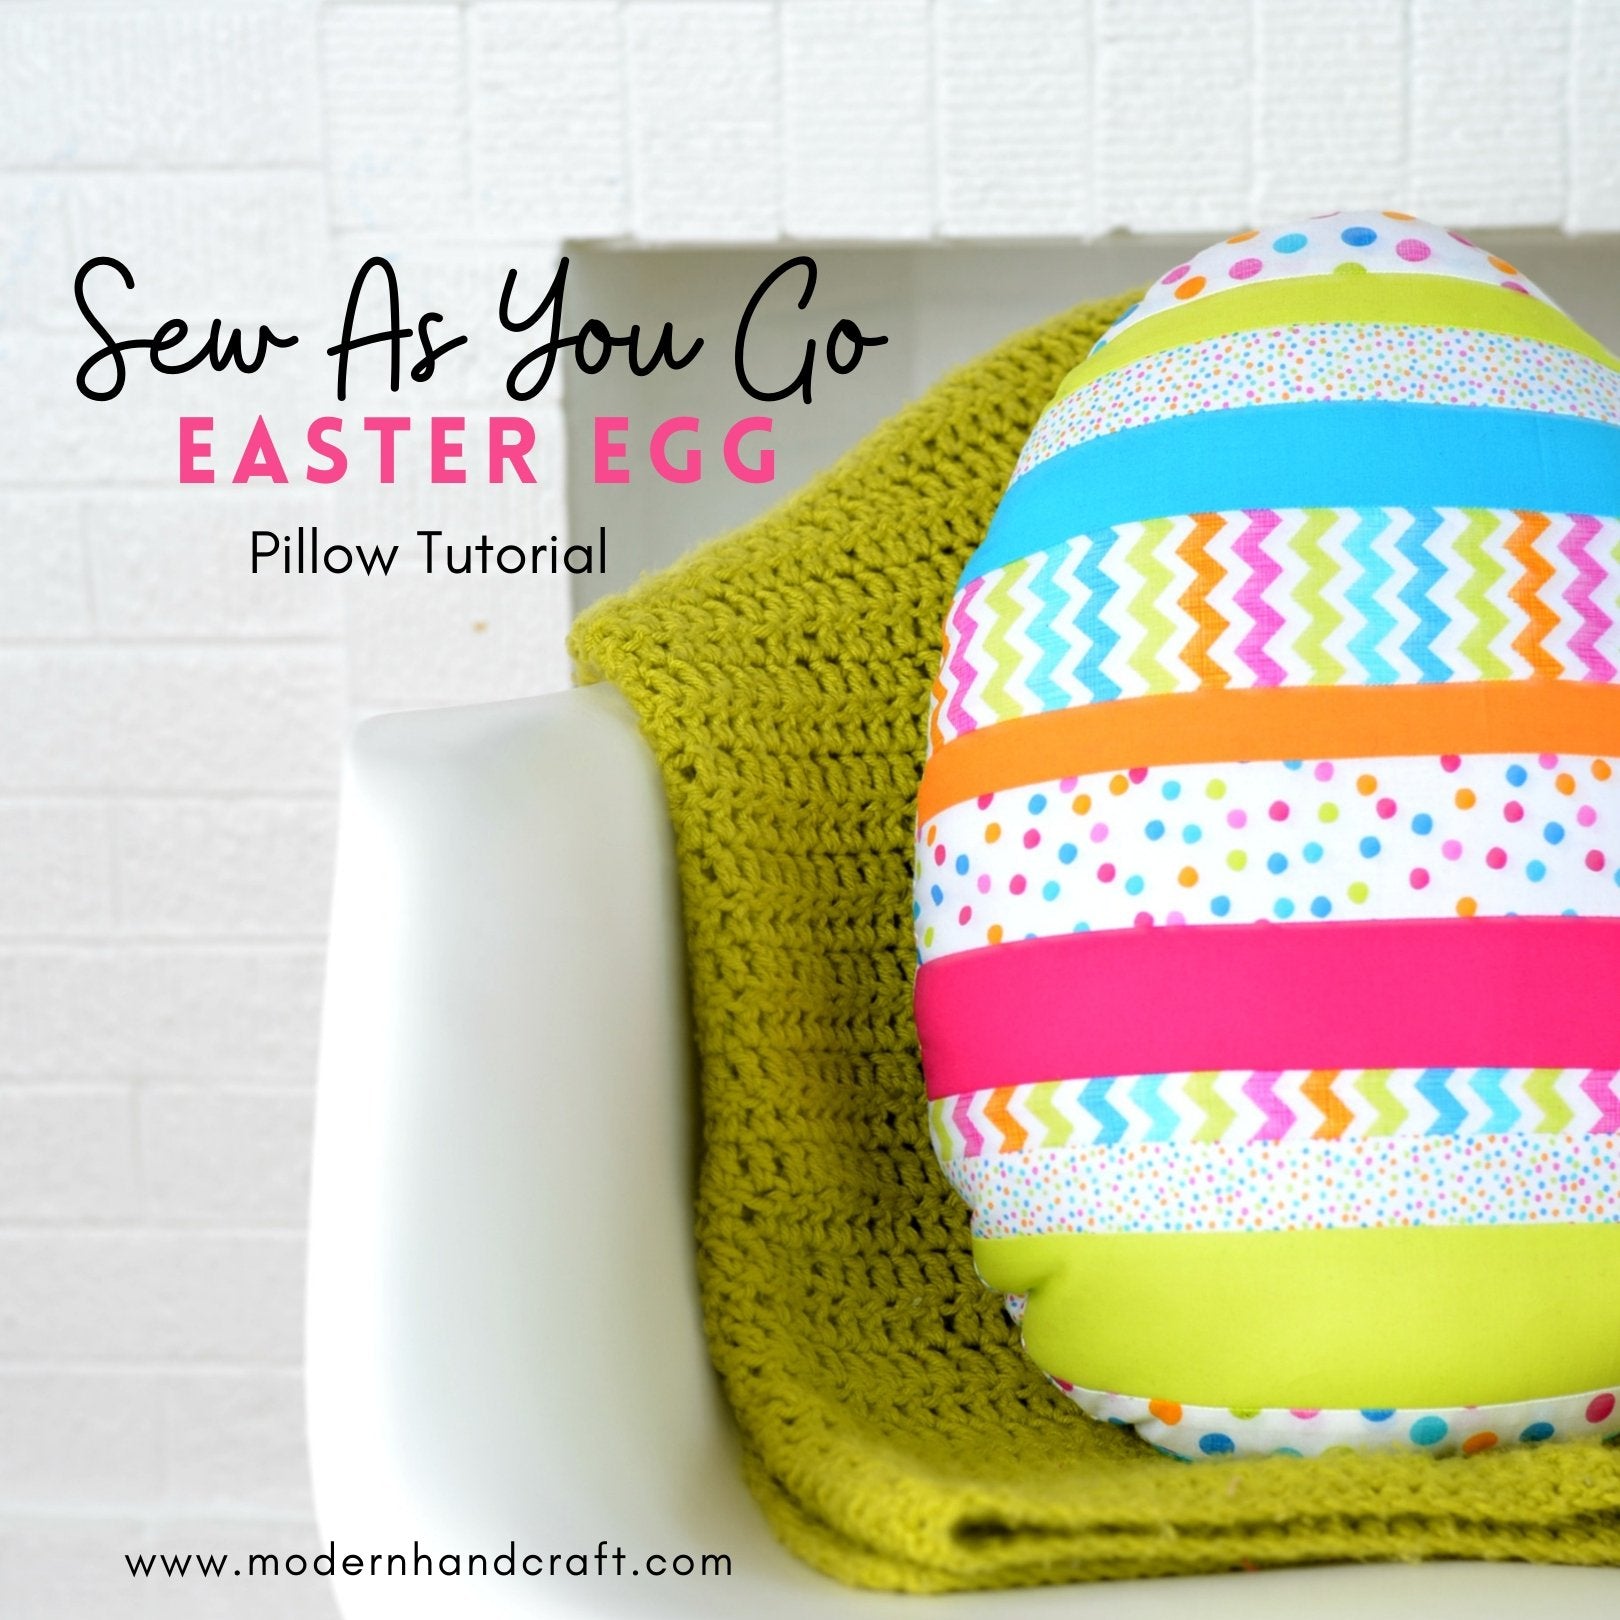 Sew As You Go Easter Egg Pillow / Tutorial | modernhandcraft